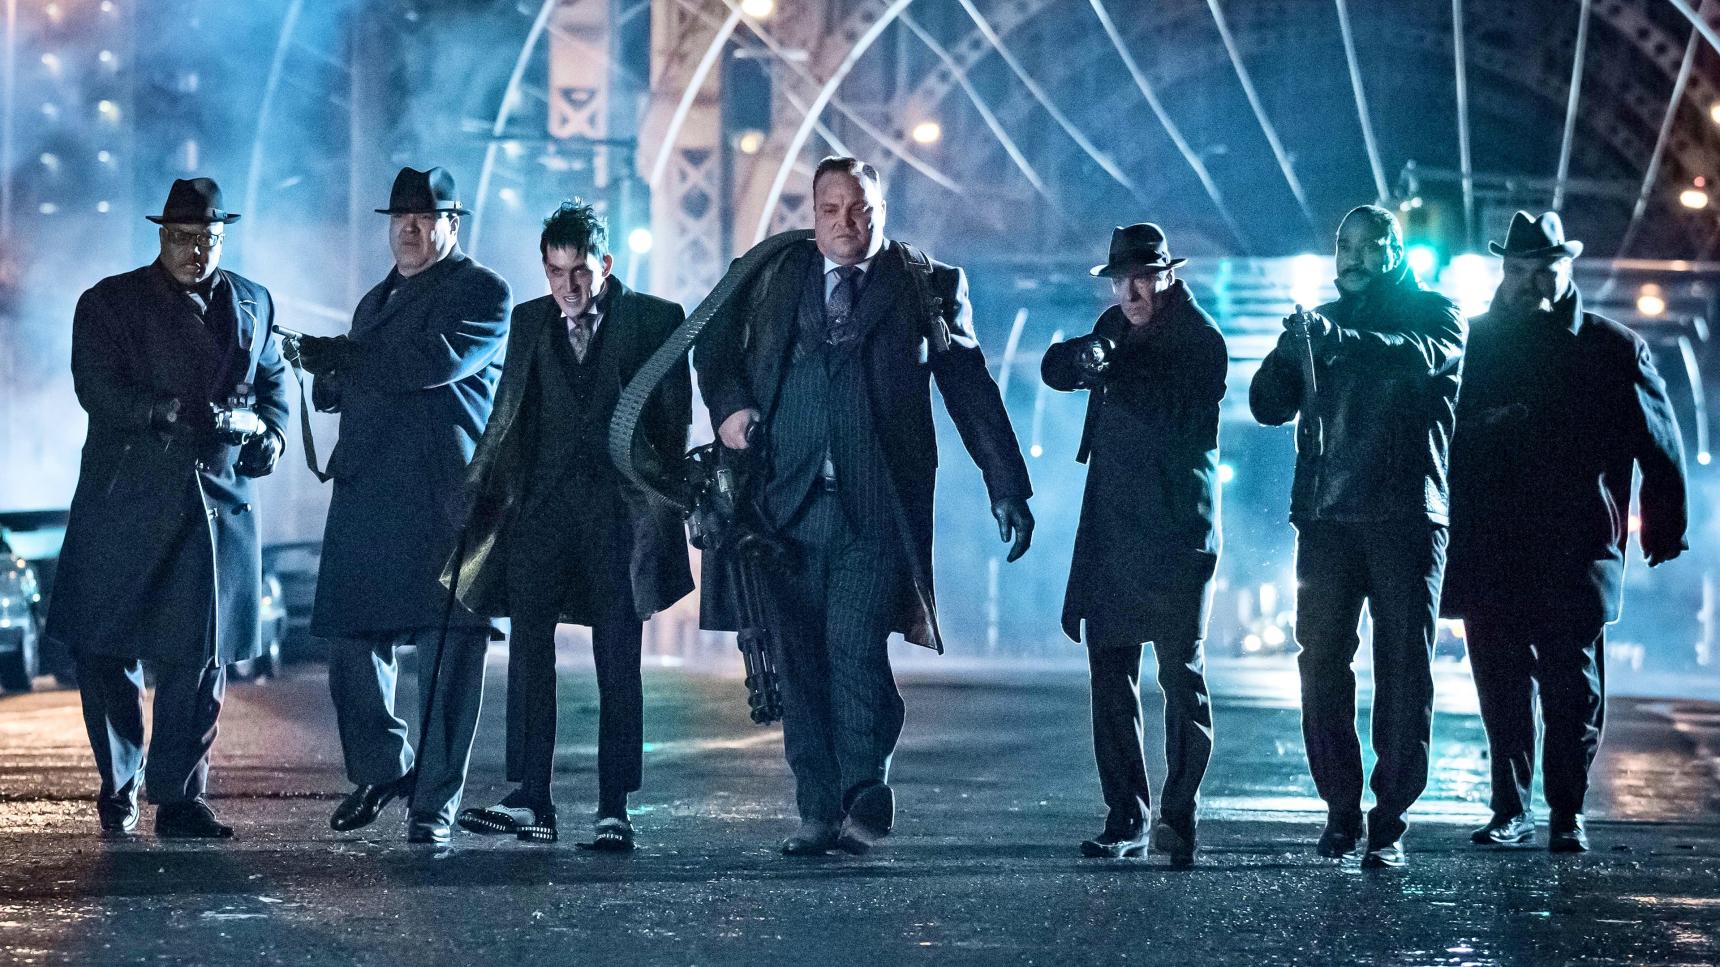 Poster del episodio 22 de Gotham online